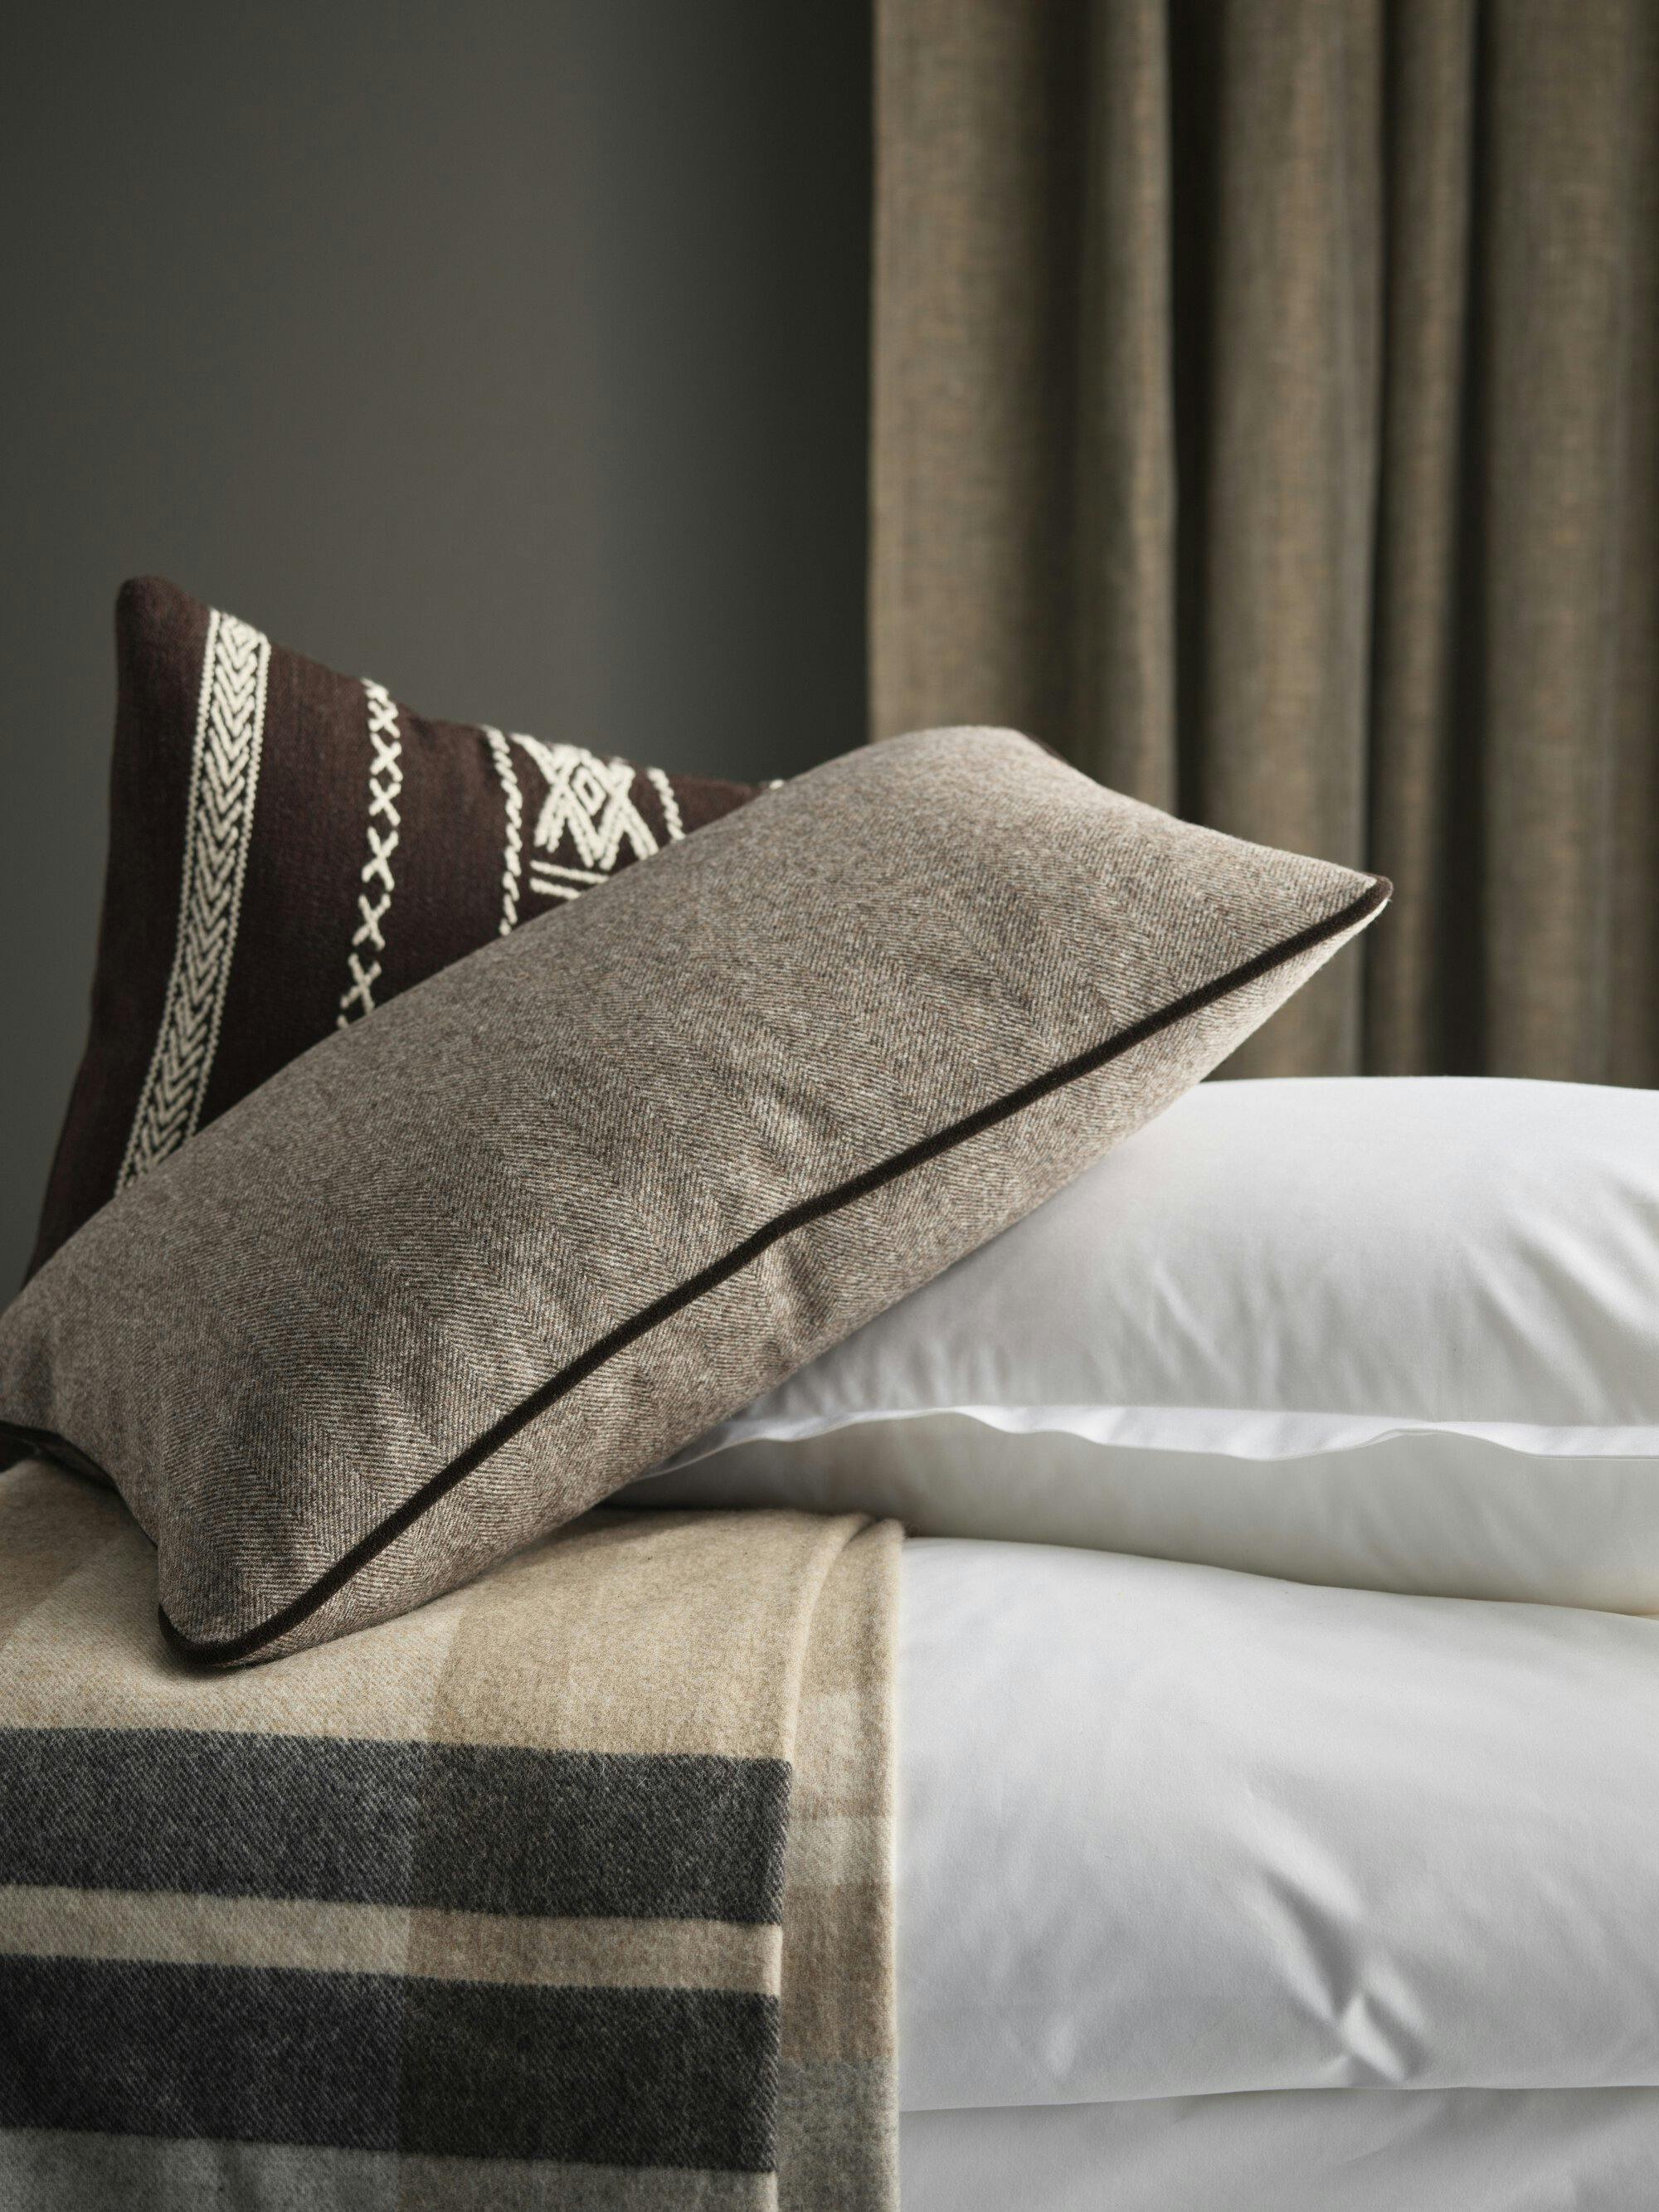 Morodune decorative pillow